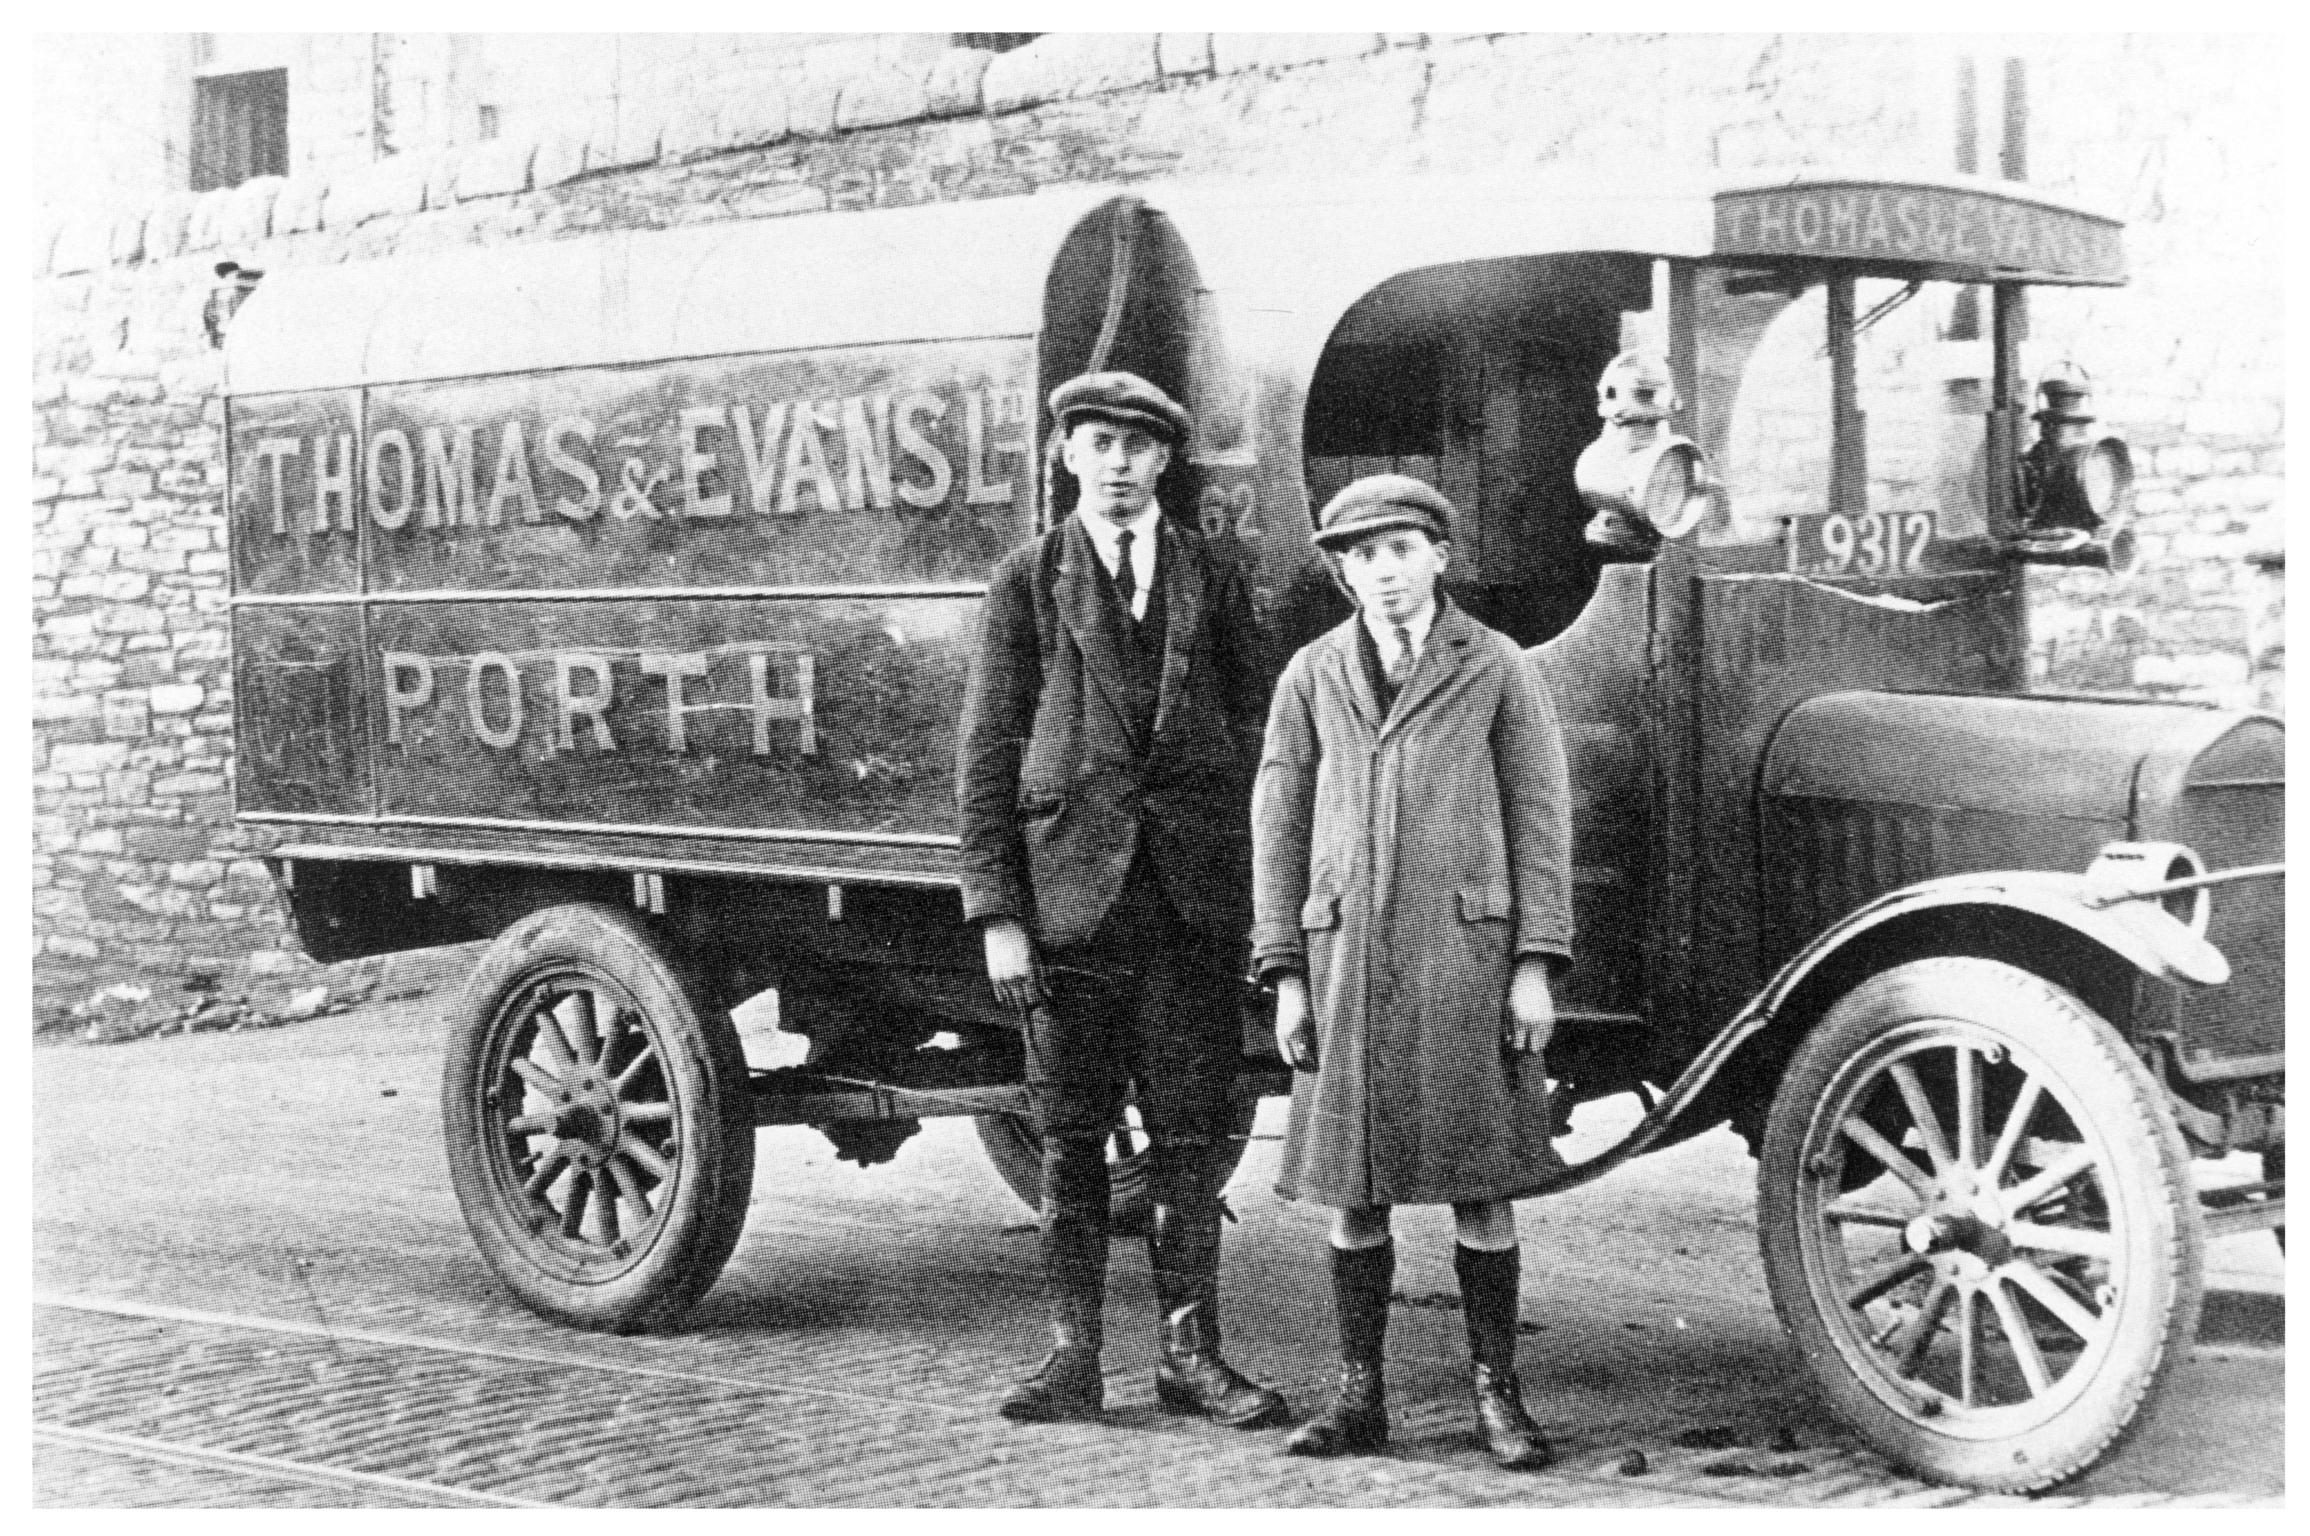 Thomas & Evans delivery van, photograph